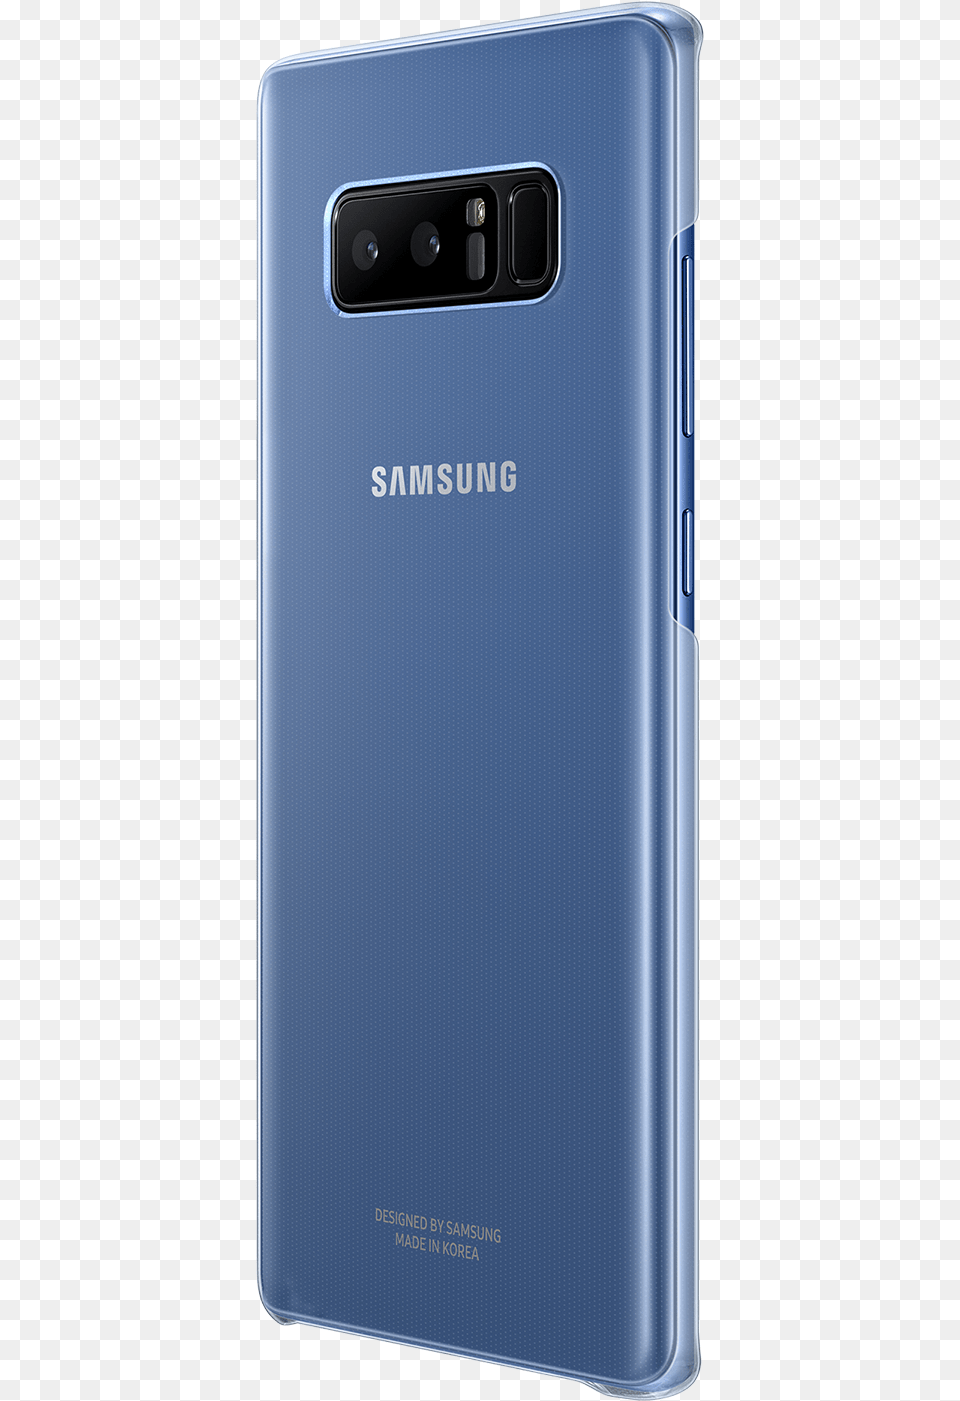 Samsung Galaxy Note8 Skaidrus Dklas Chelsea Fc 2010 2011, Electronics, Mobile Phone, Phone Free Png